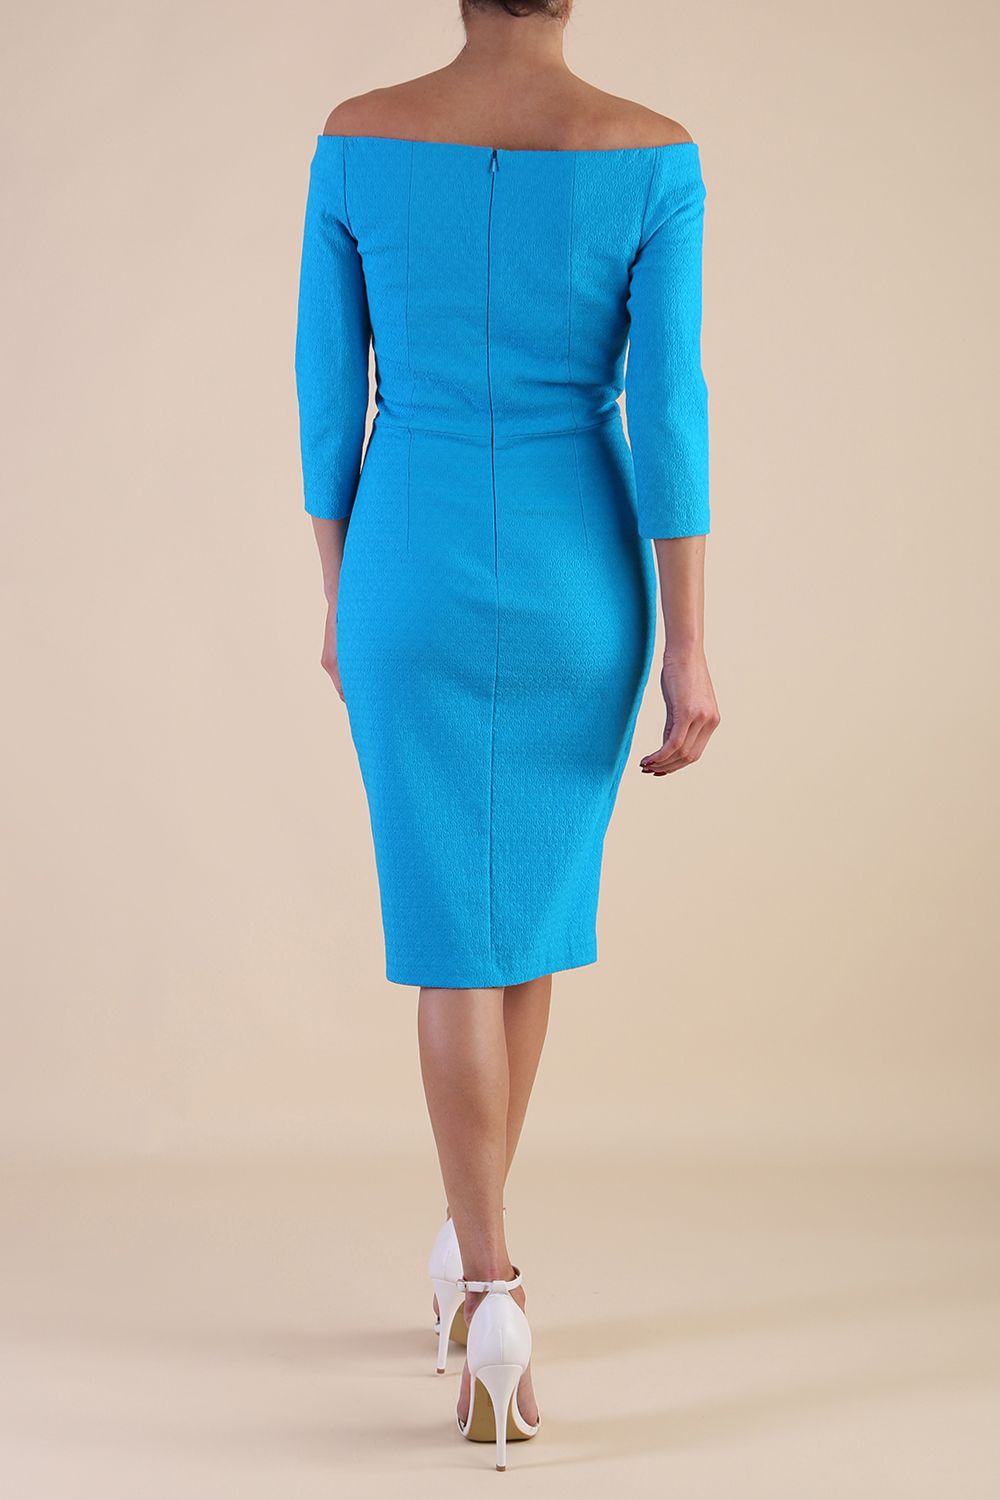 Model wearing diva catwalk Trixie dress in Turquoise Blue back